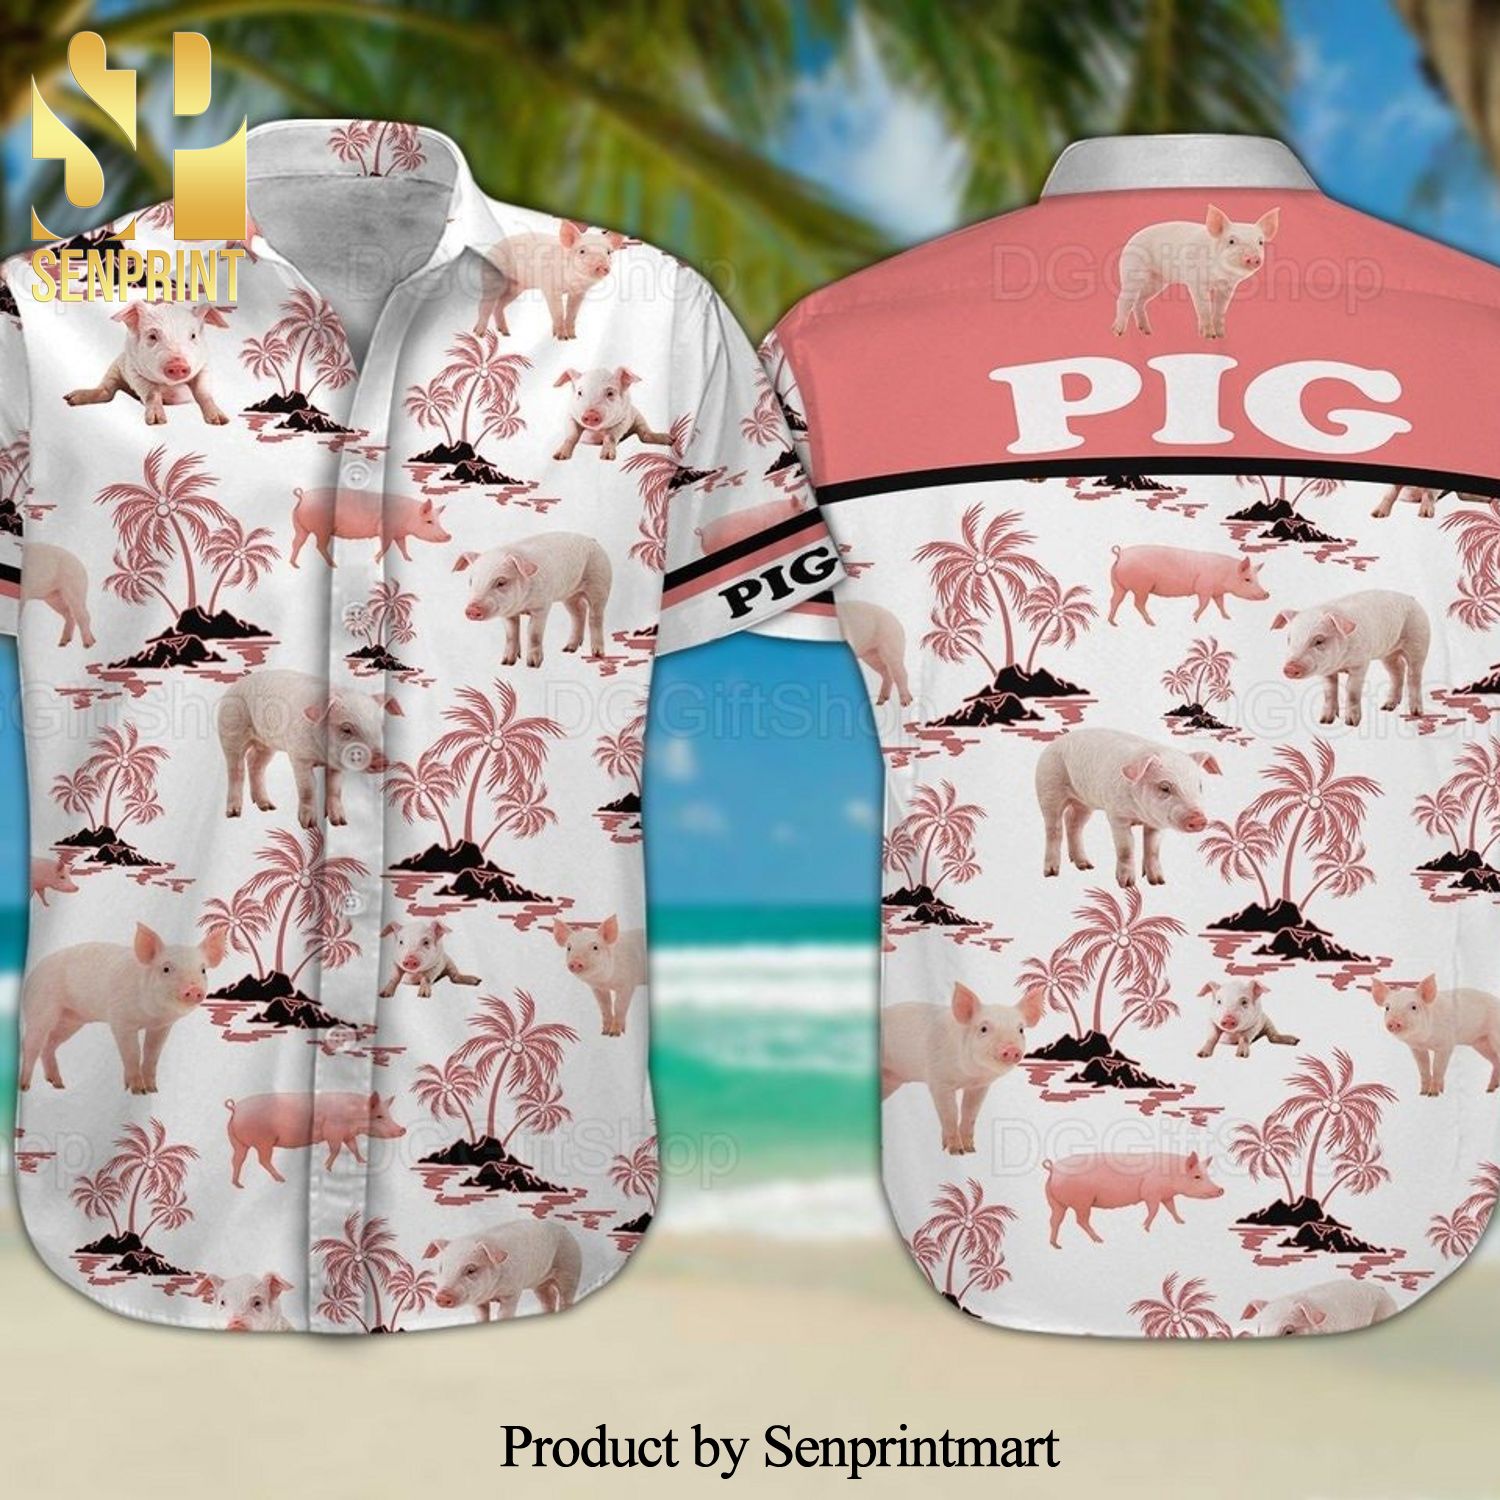 Pig Amazing Outfit Hawaiian Shirt